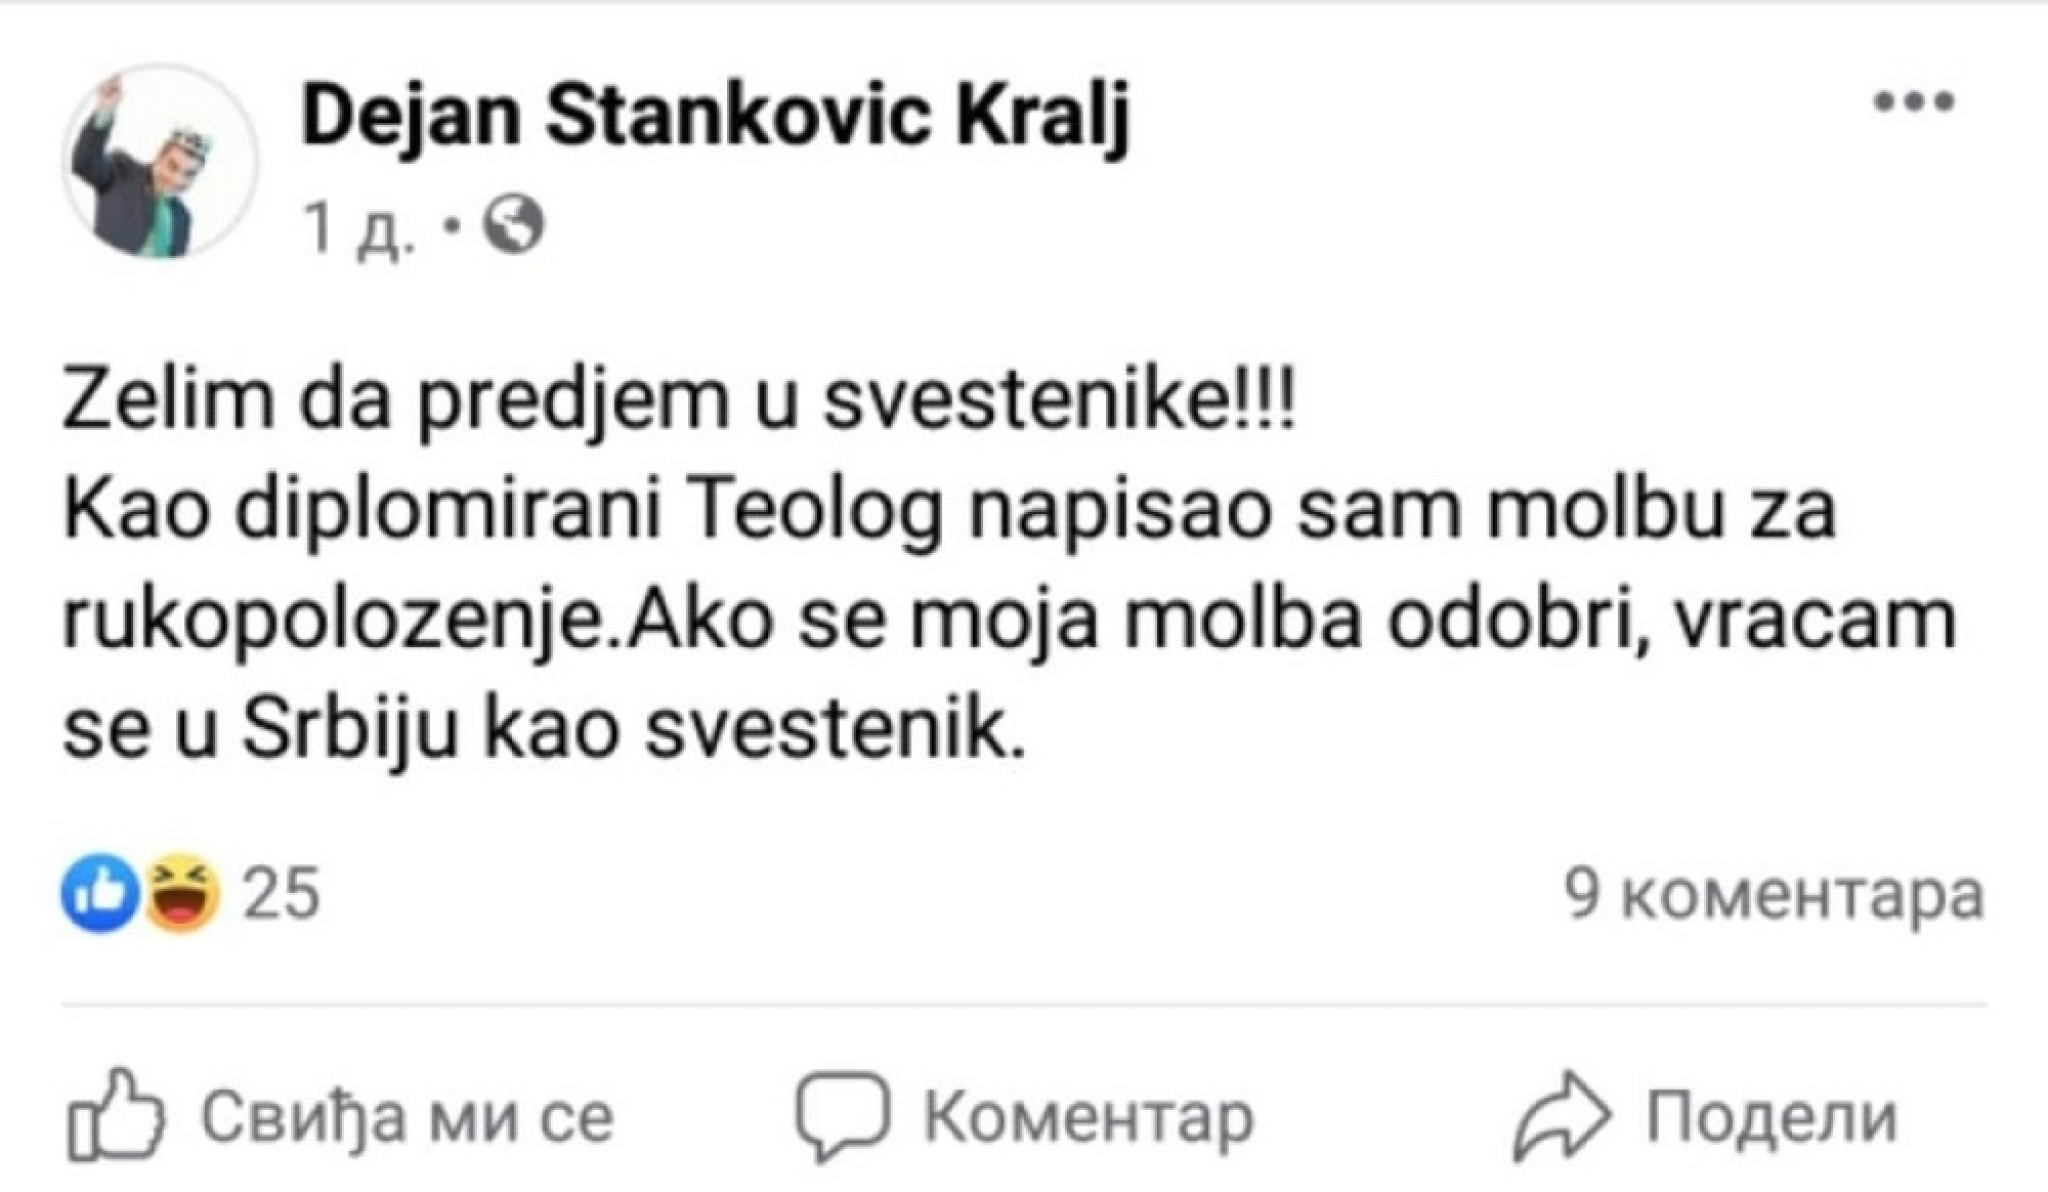 Dejan Stanković kralj